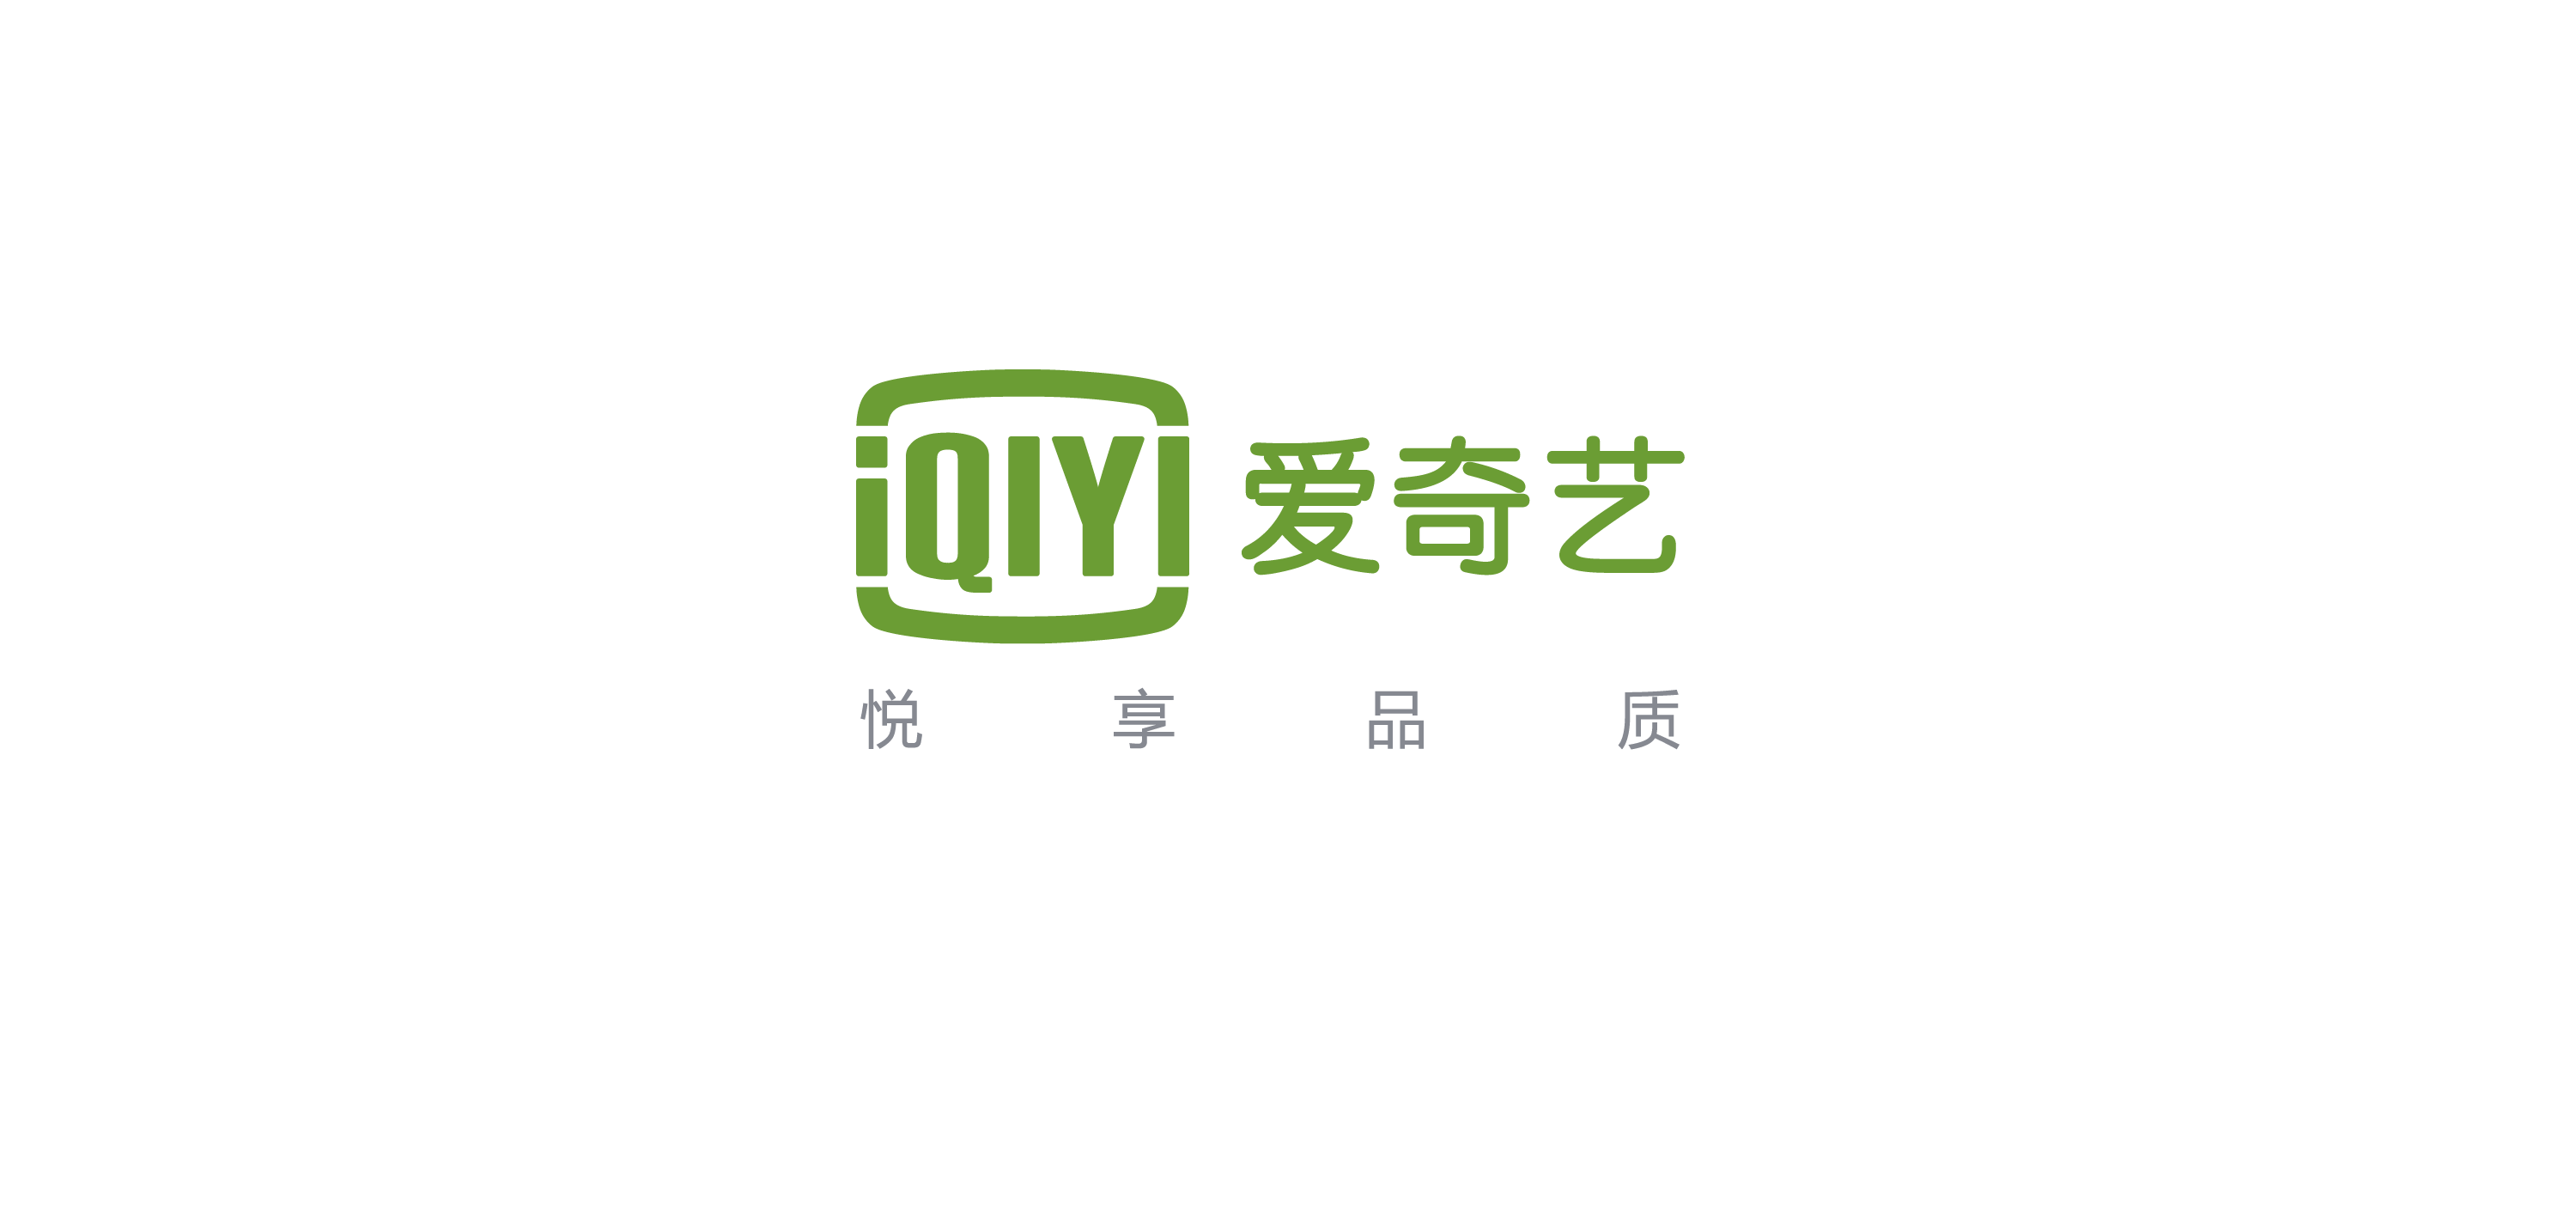 IQiyi logo vector